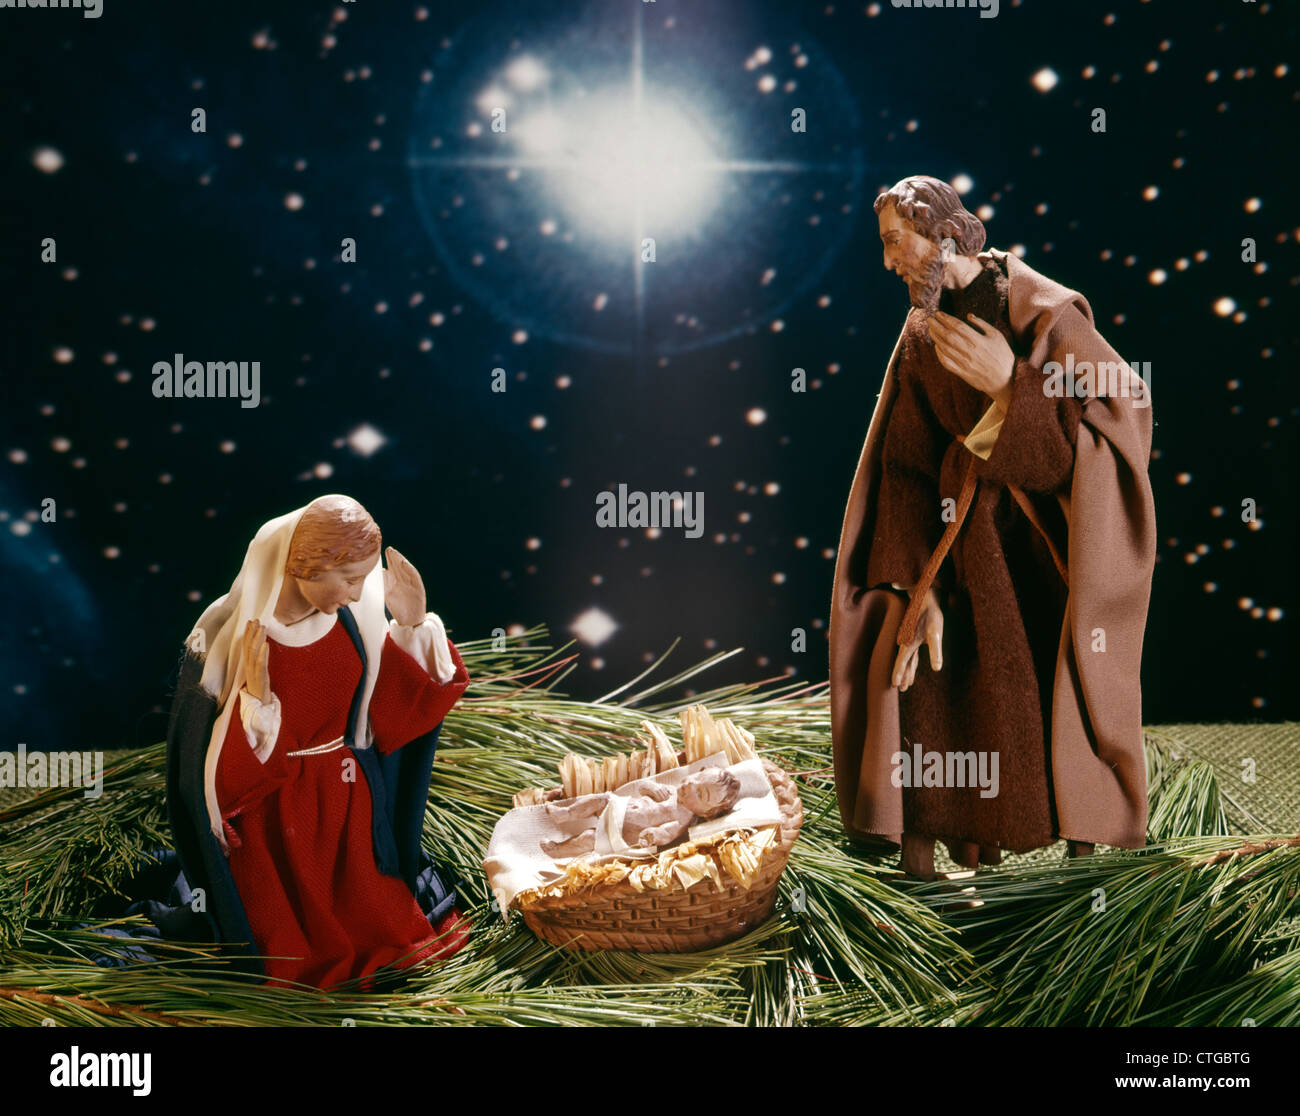 STARS NATIVITY BABY JESUS MARY JOSEPH Stock Image